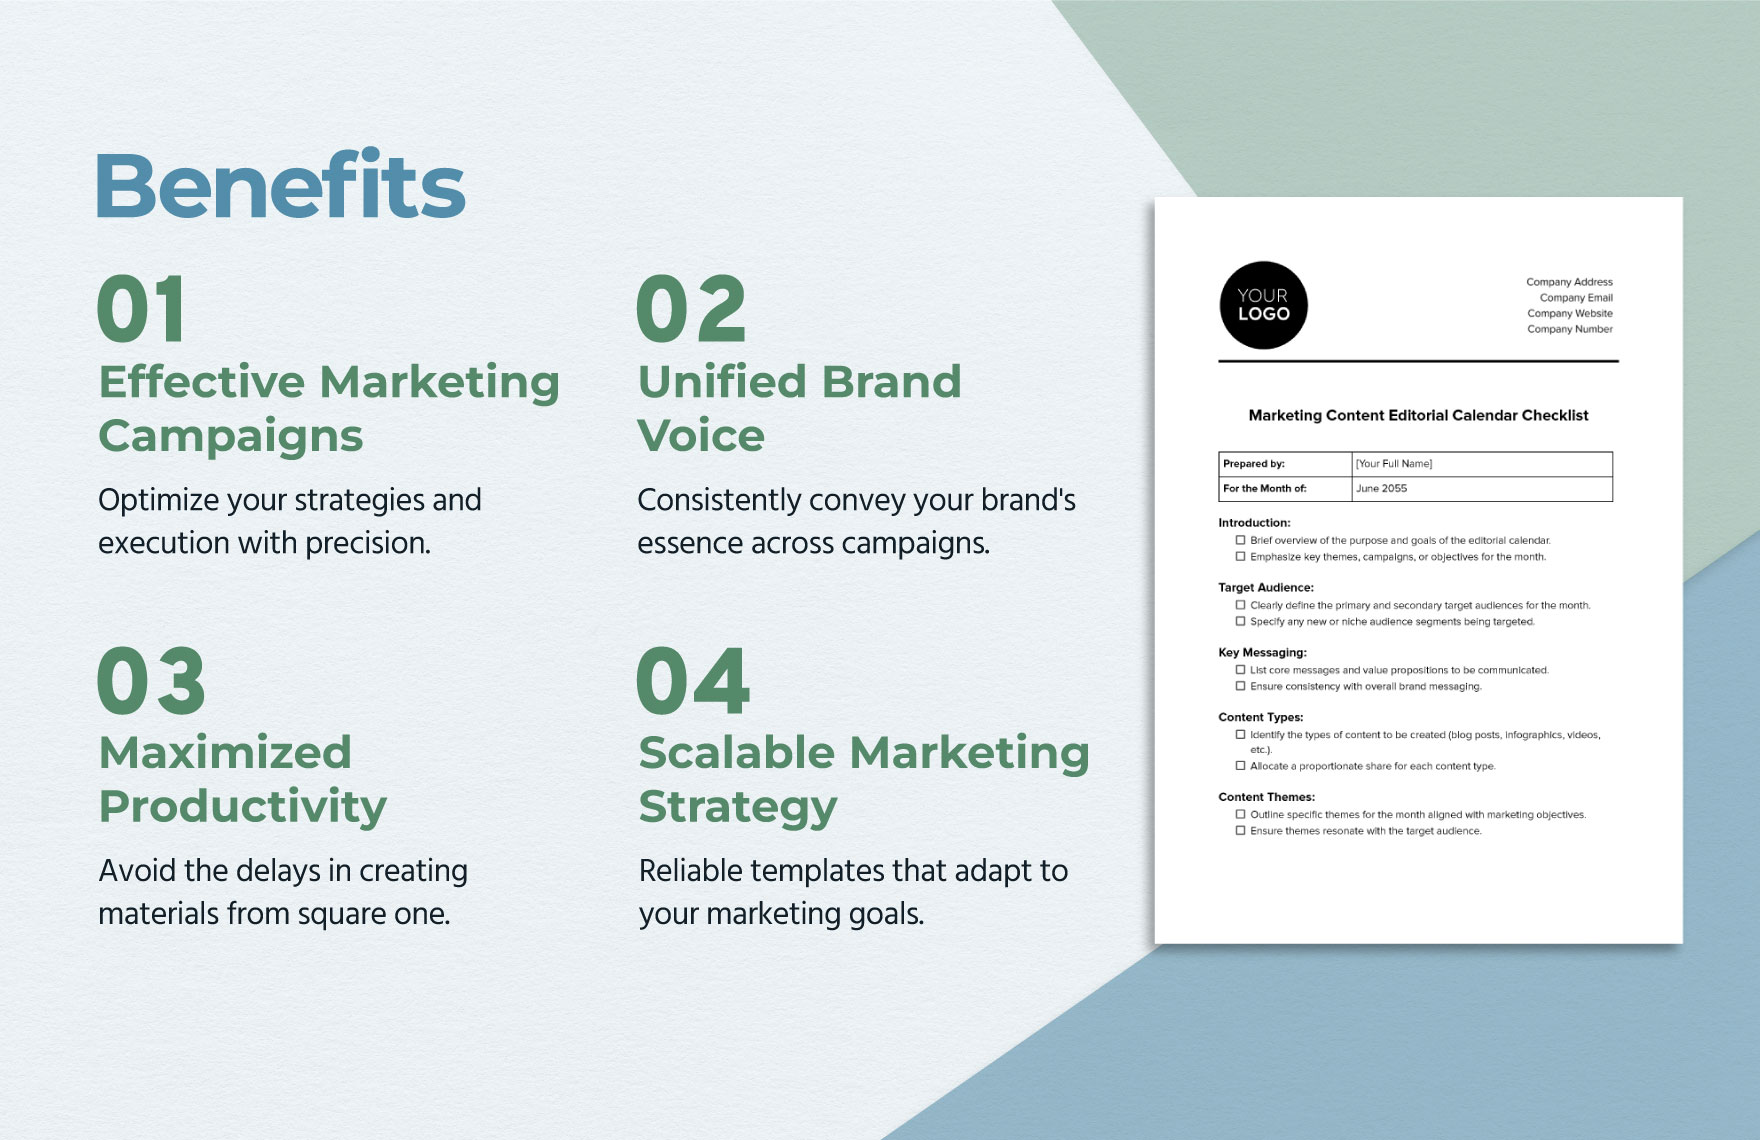 Marketing Content Editorial Calendar Checklist Template